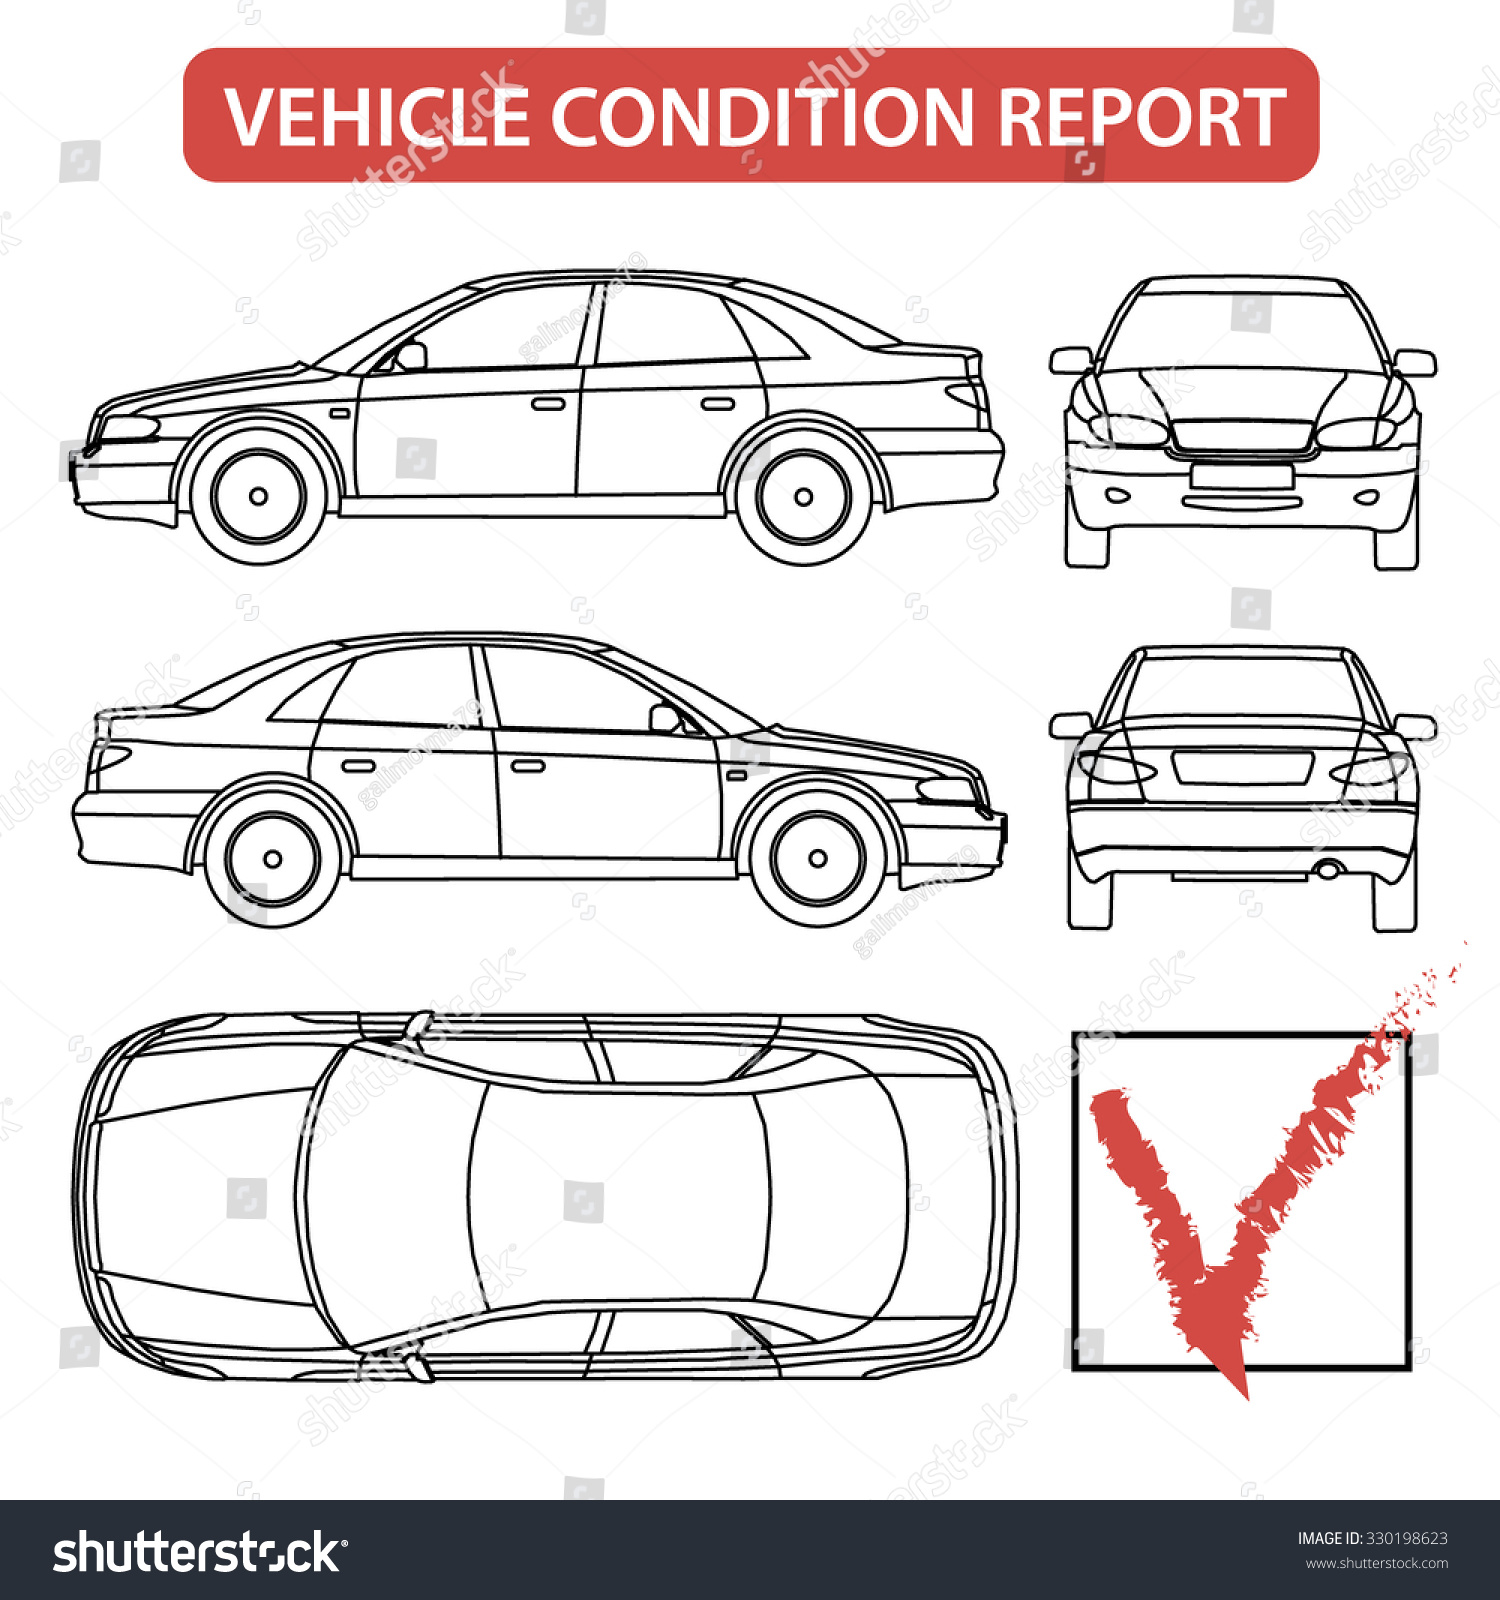 Formular für den Zustand des Fahrzeugs: Stock-Vektorgrafik Pertaining To Car Damage Report Template